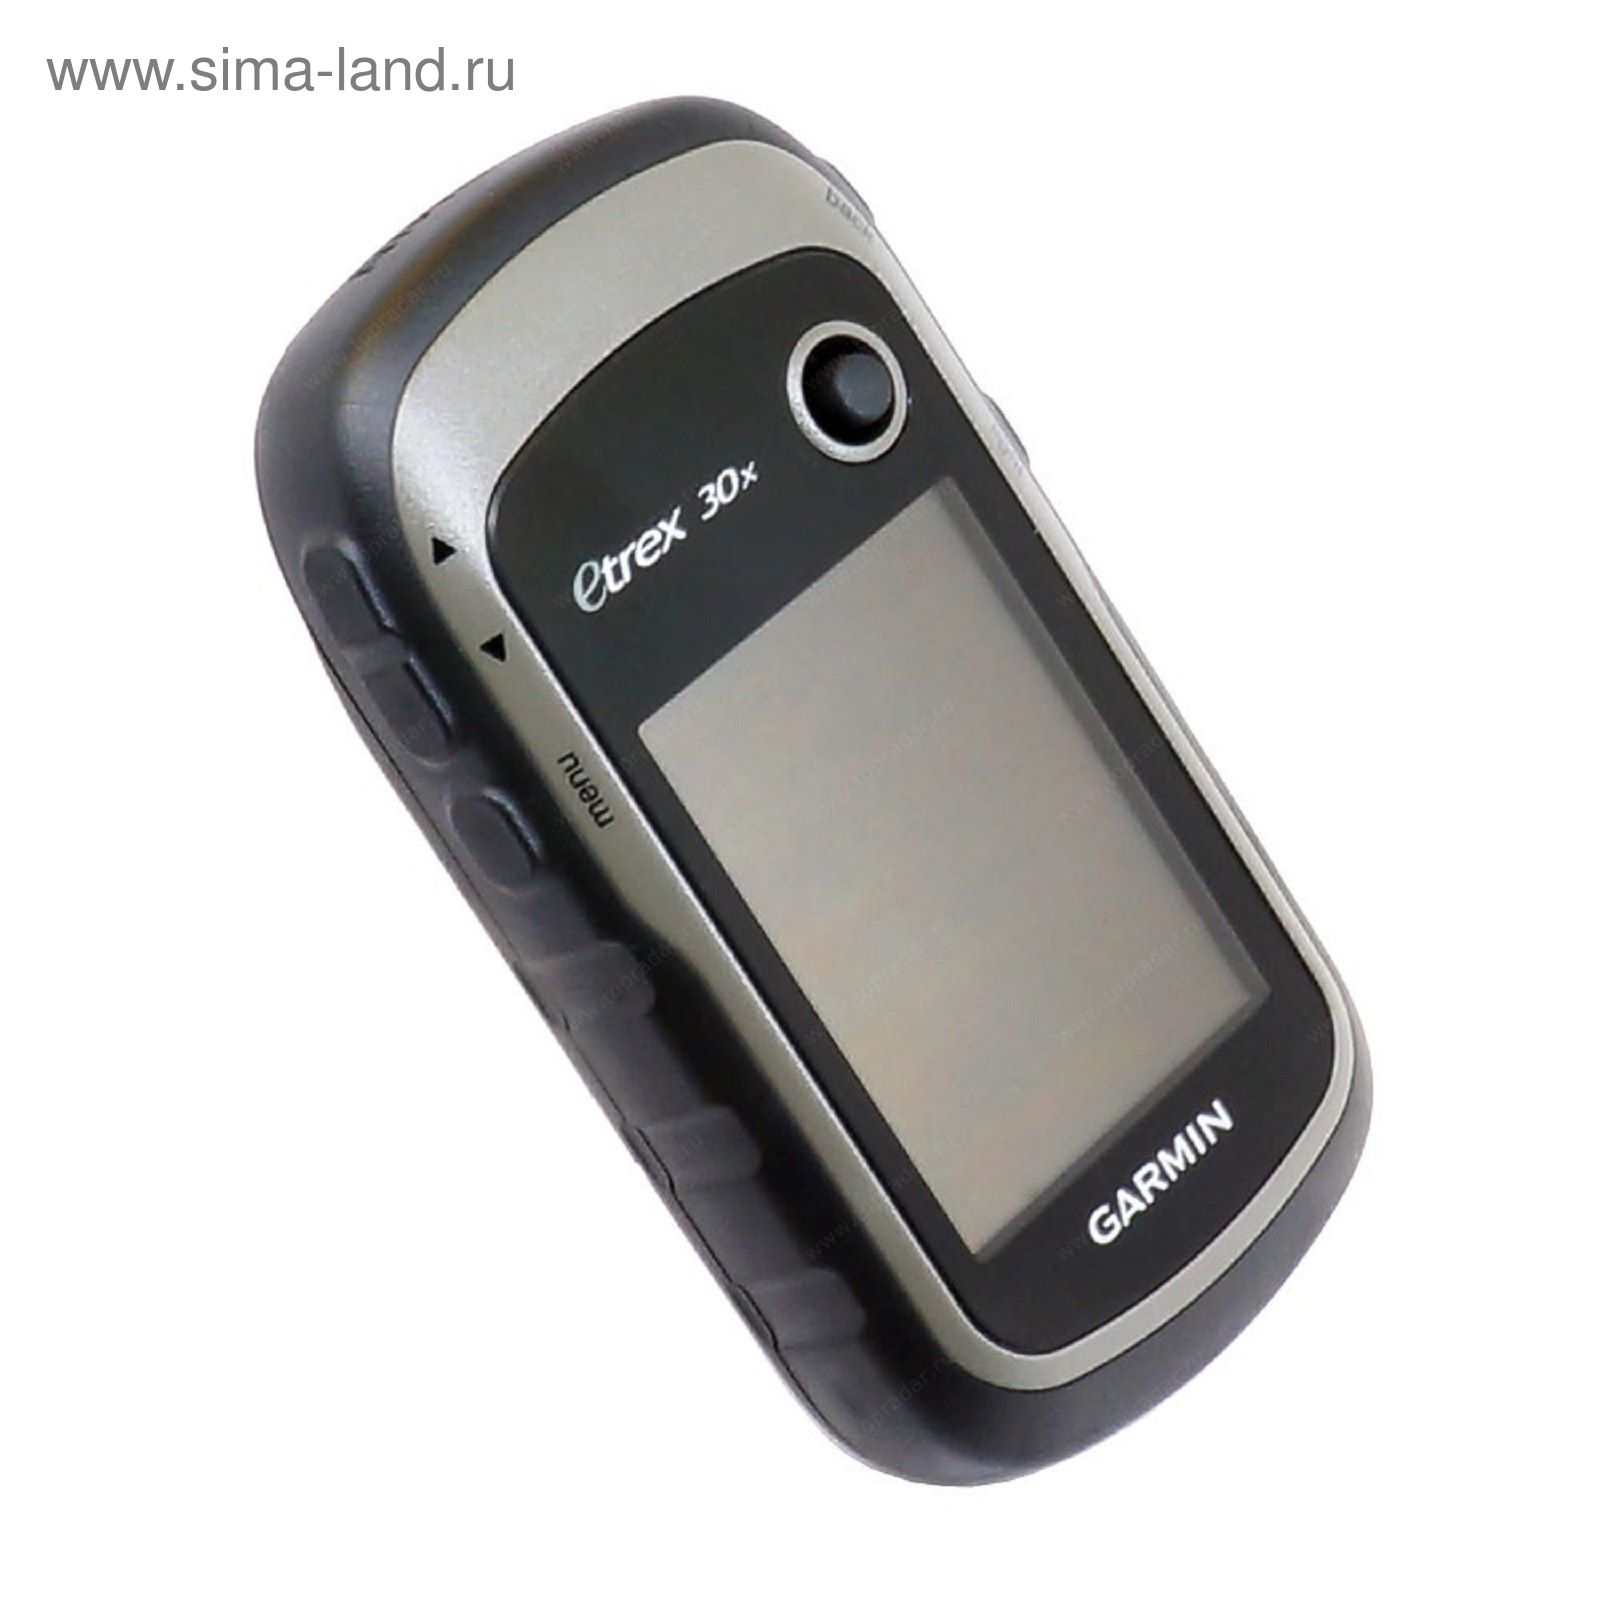 GPS-навигатор Garmin eTrex 30x, GPS, GLONASS Дороги РФ